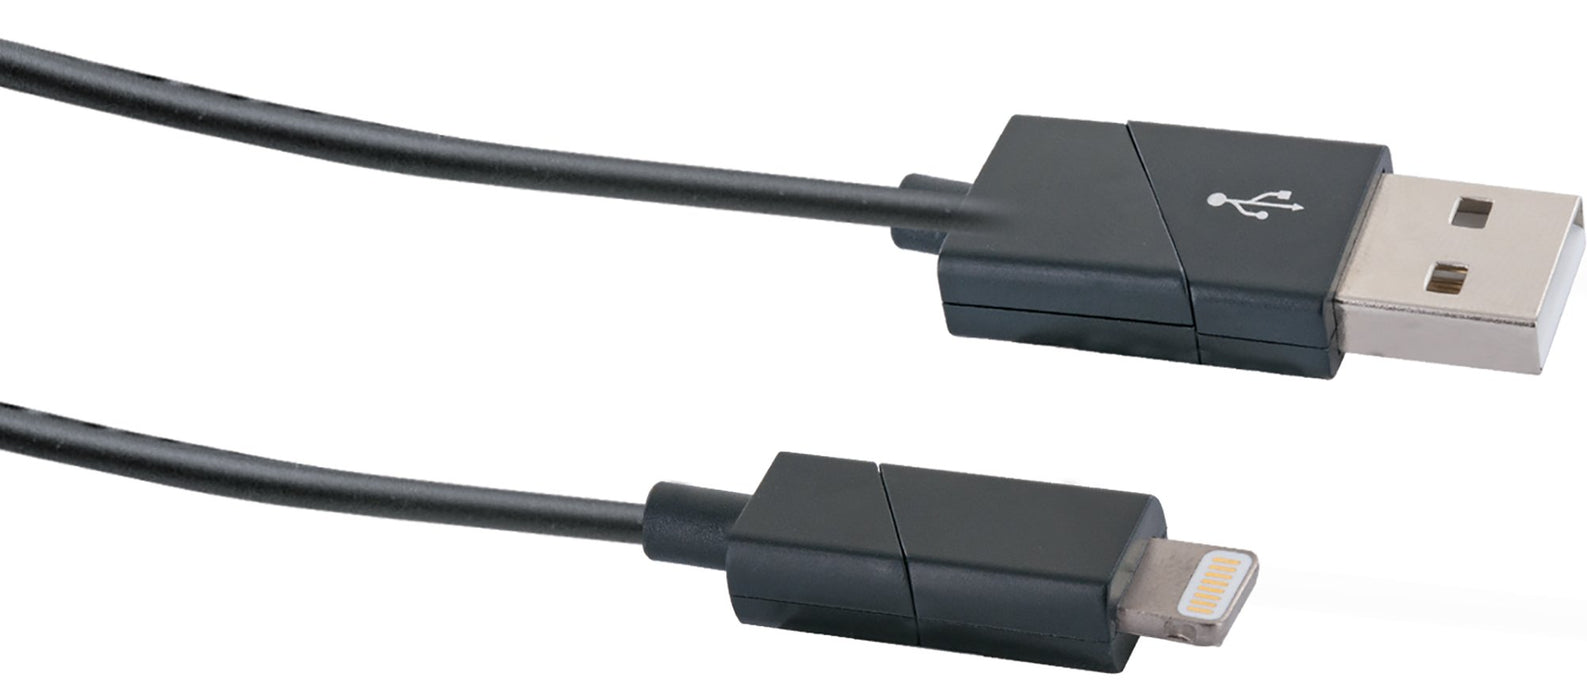 Apple® Lightning Sync & Ladekabel, drehbar